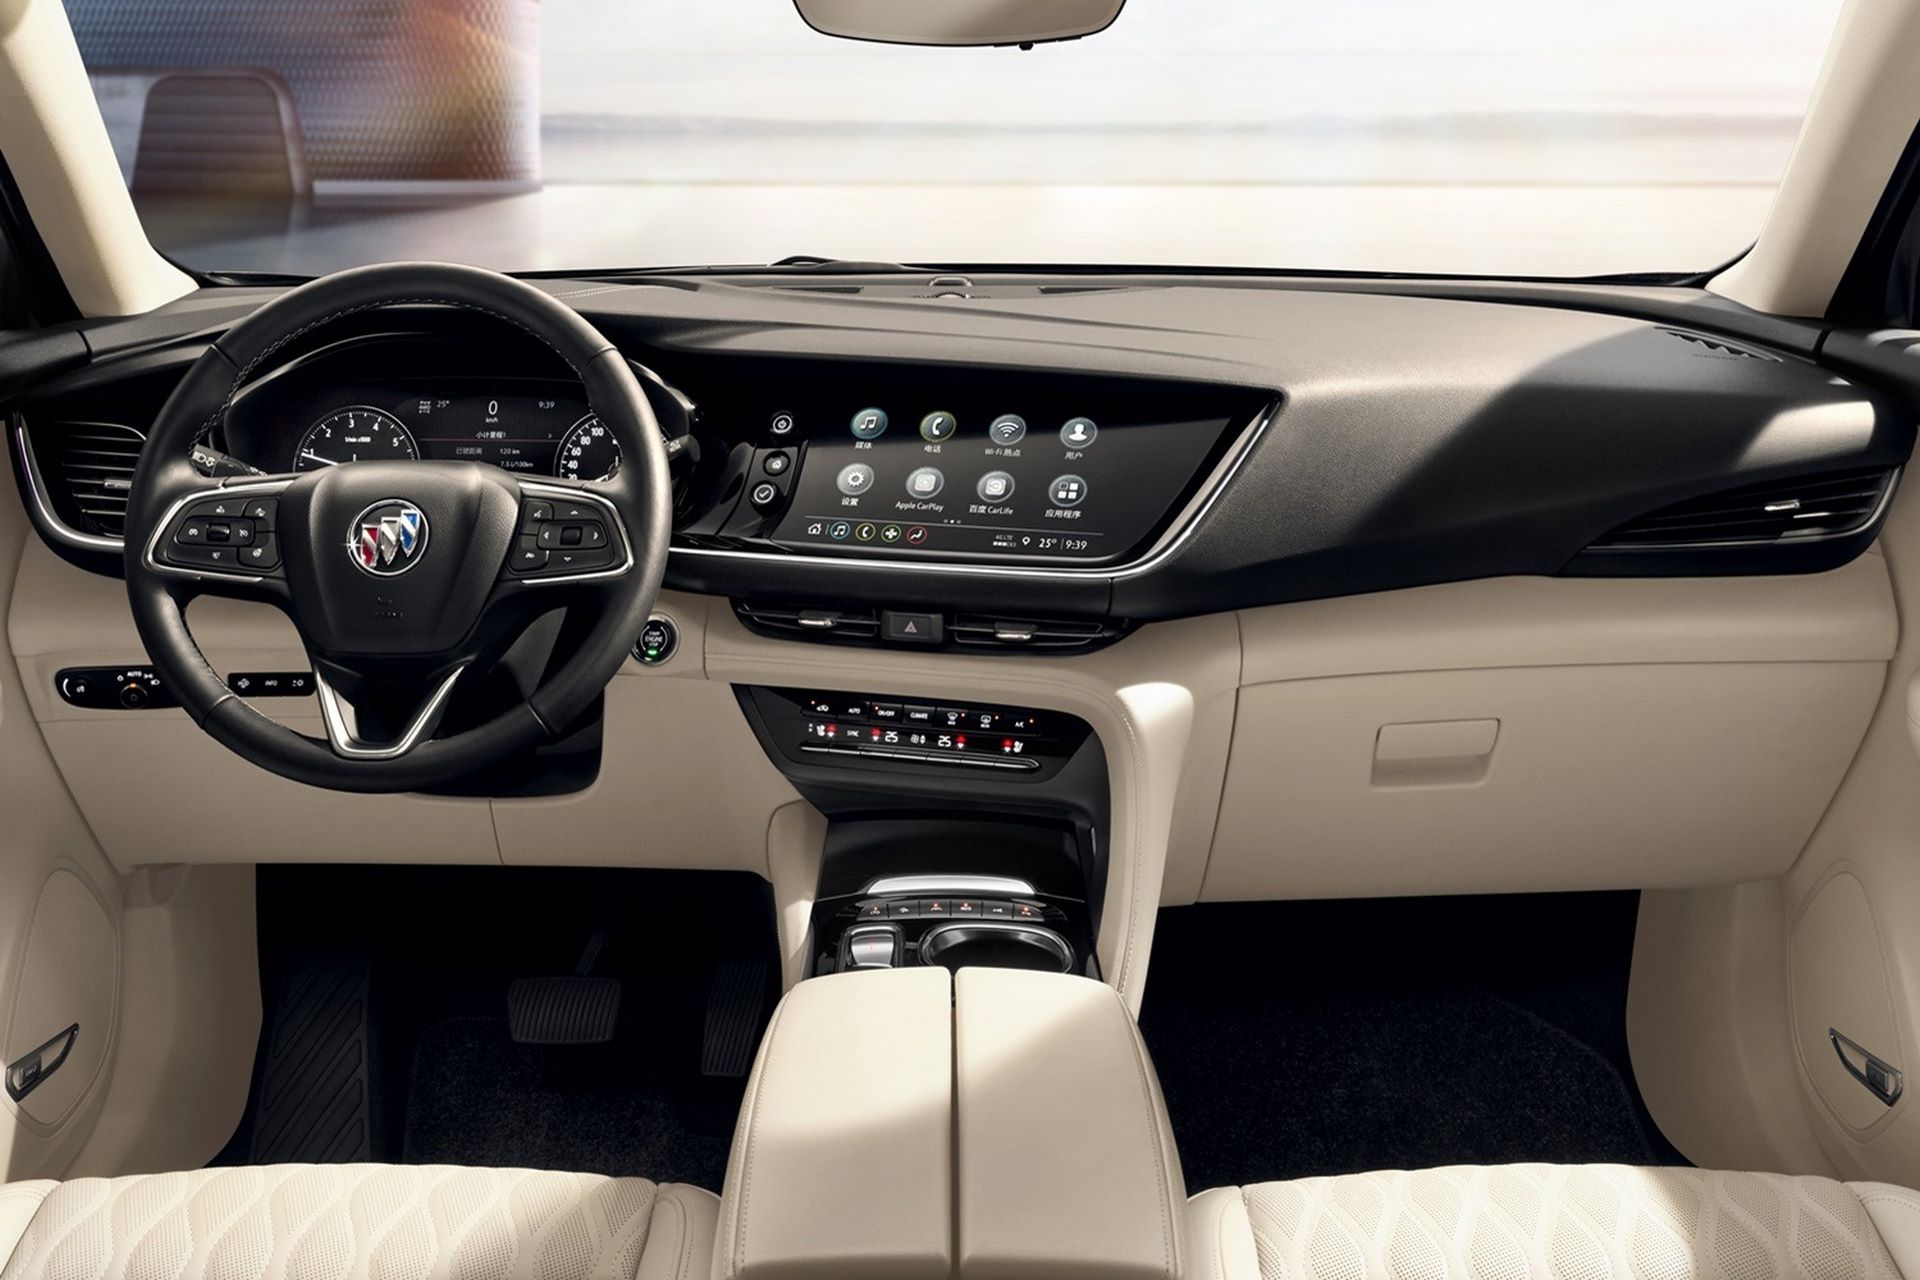 2021 Buick Envision Interior